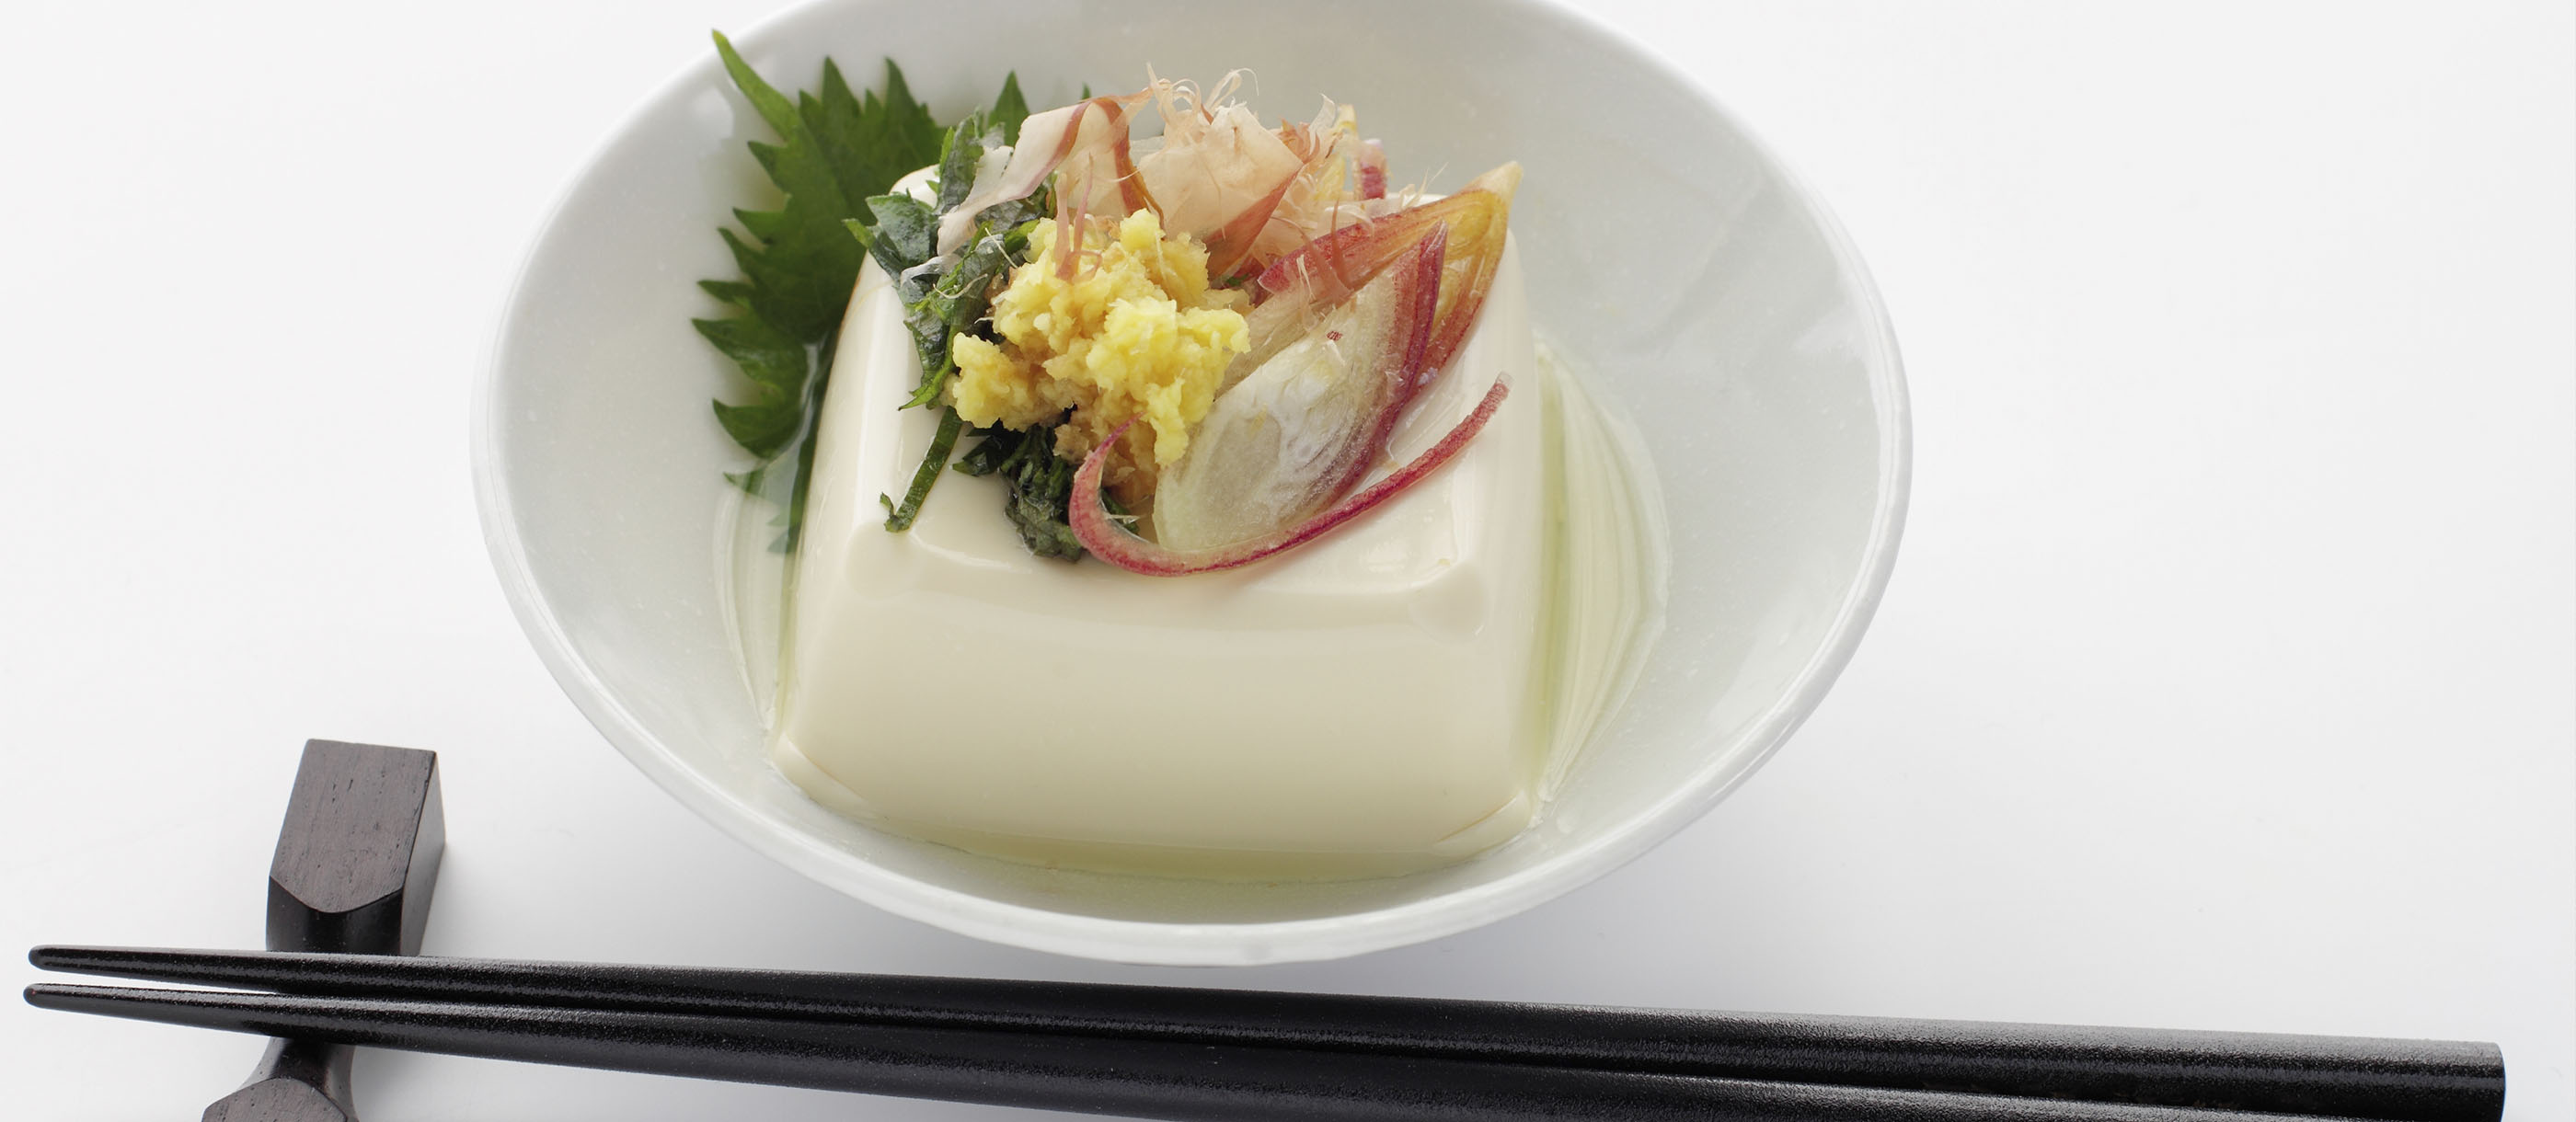 Hiyayakko Traditional Side Dish From Japan